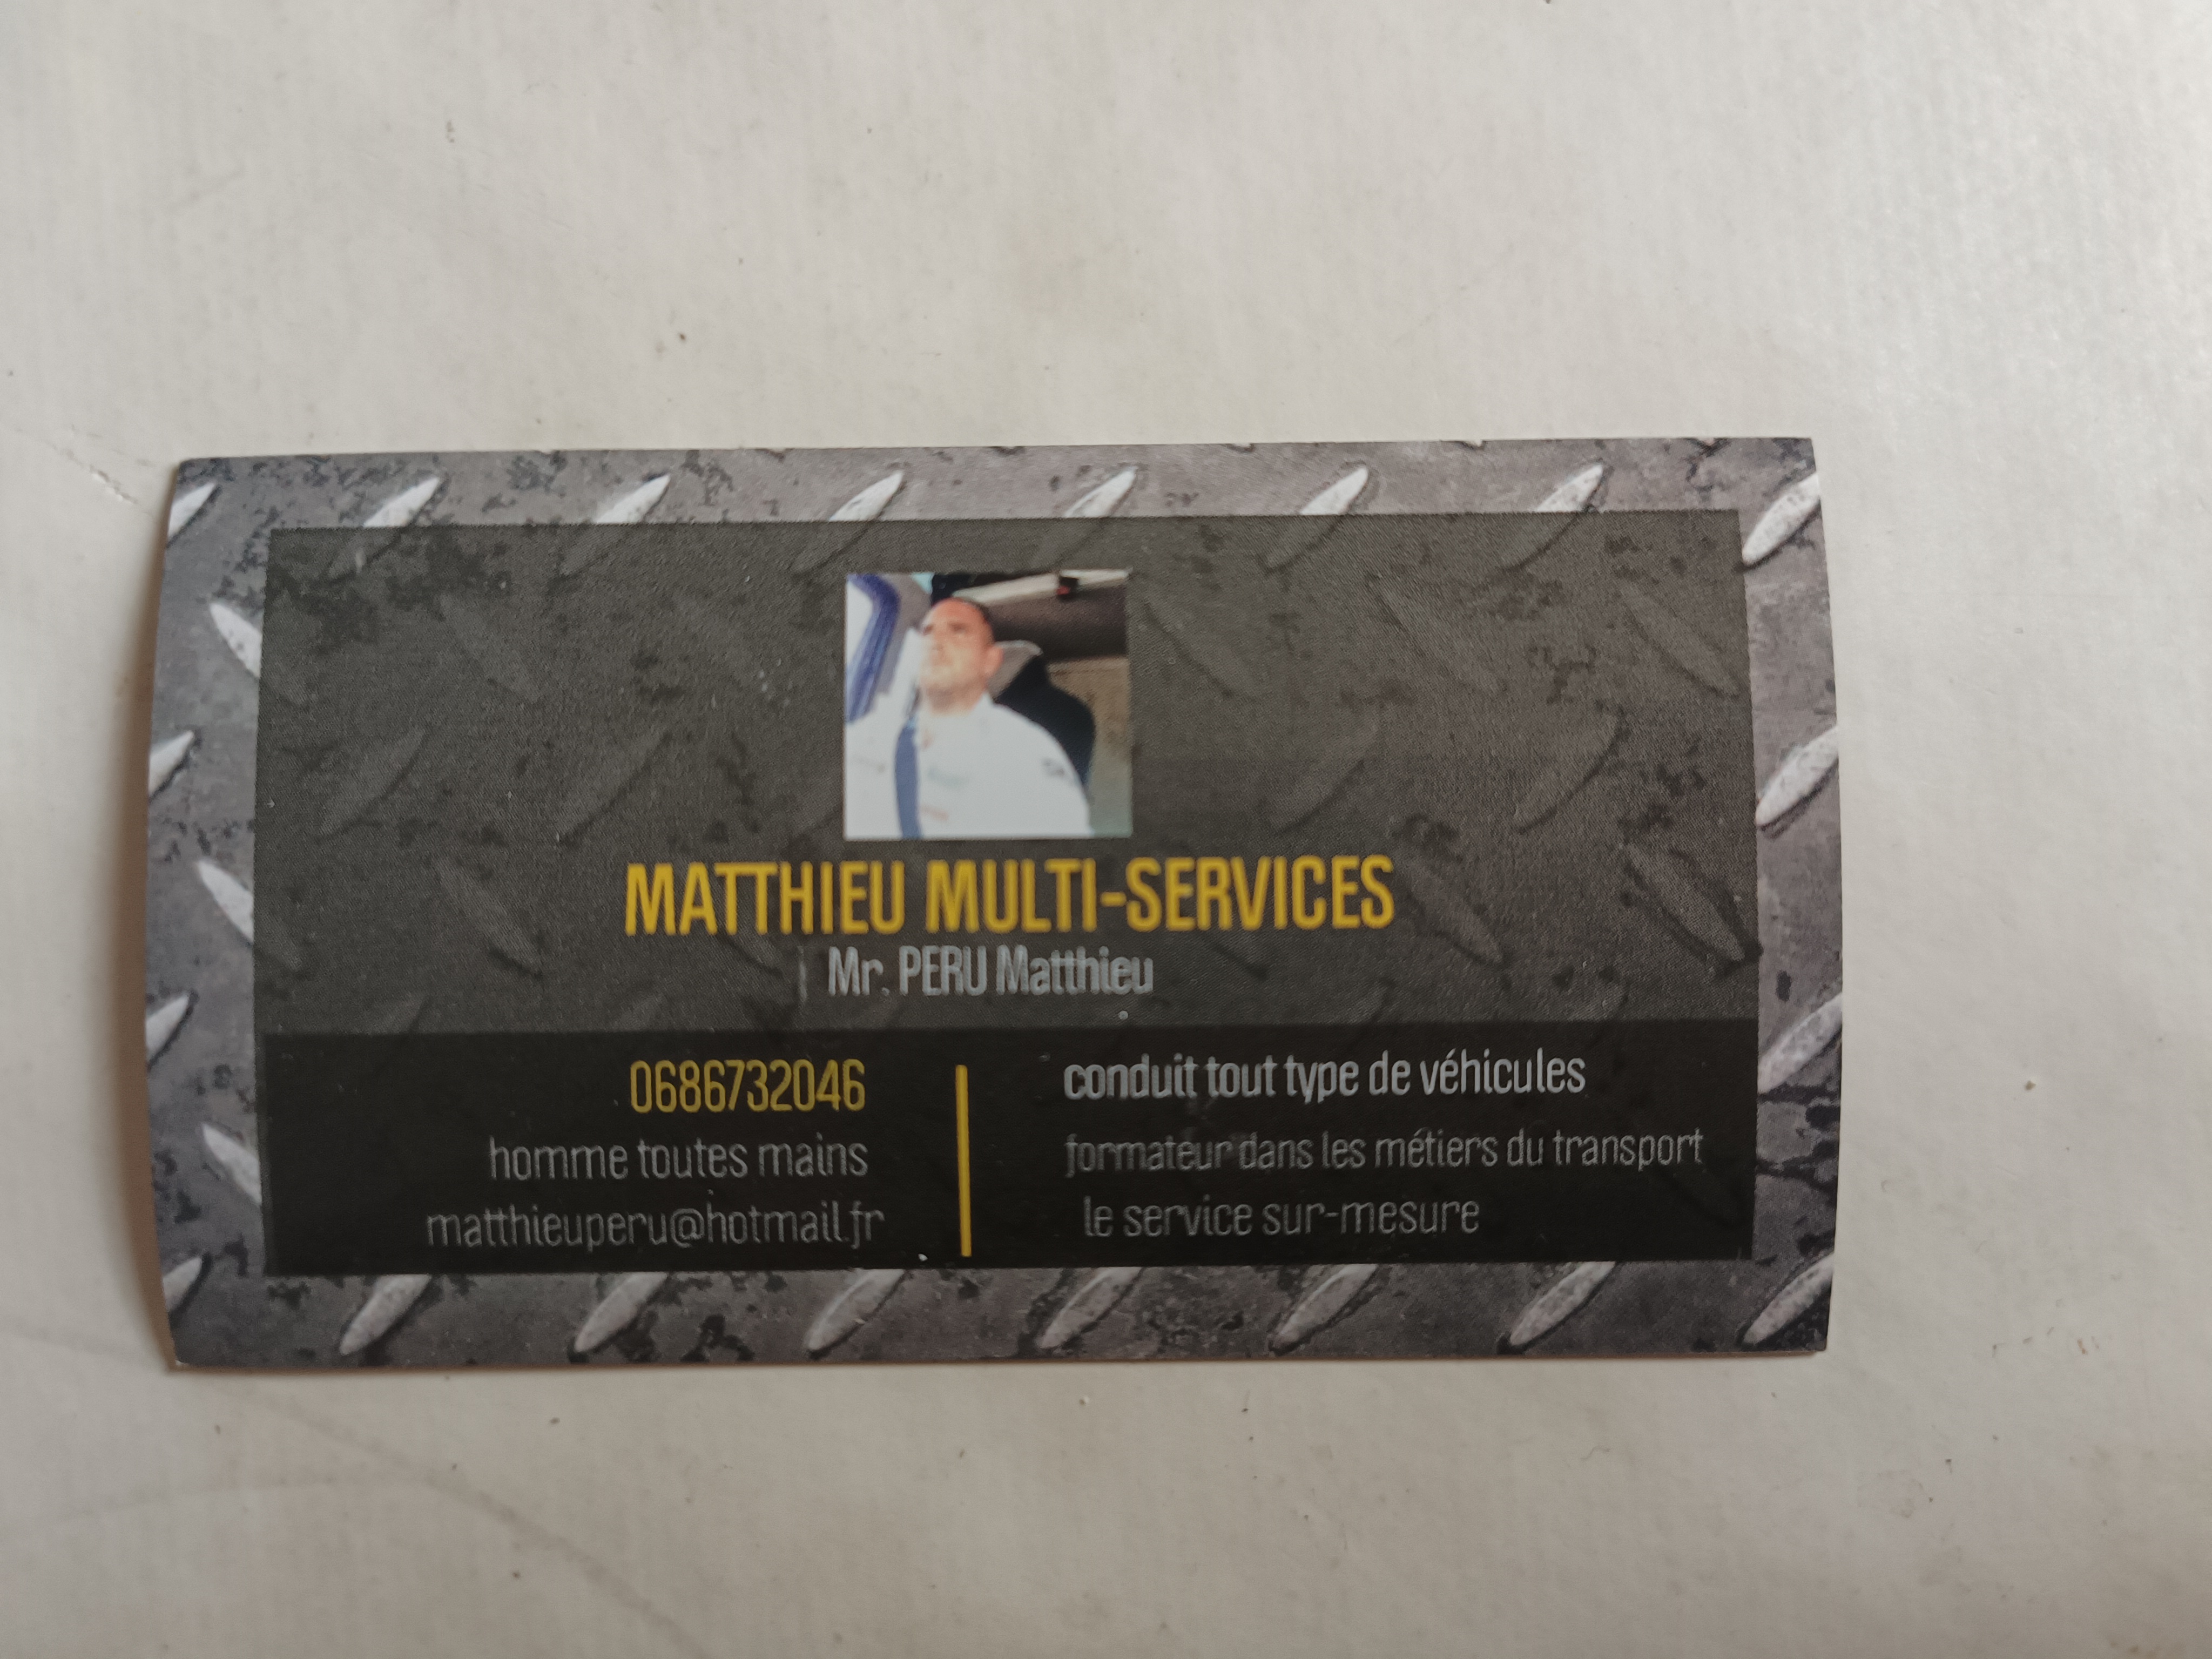 Matthieu multi services.jpg